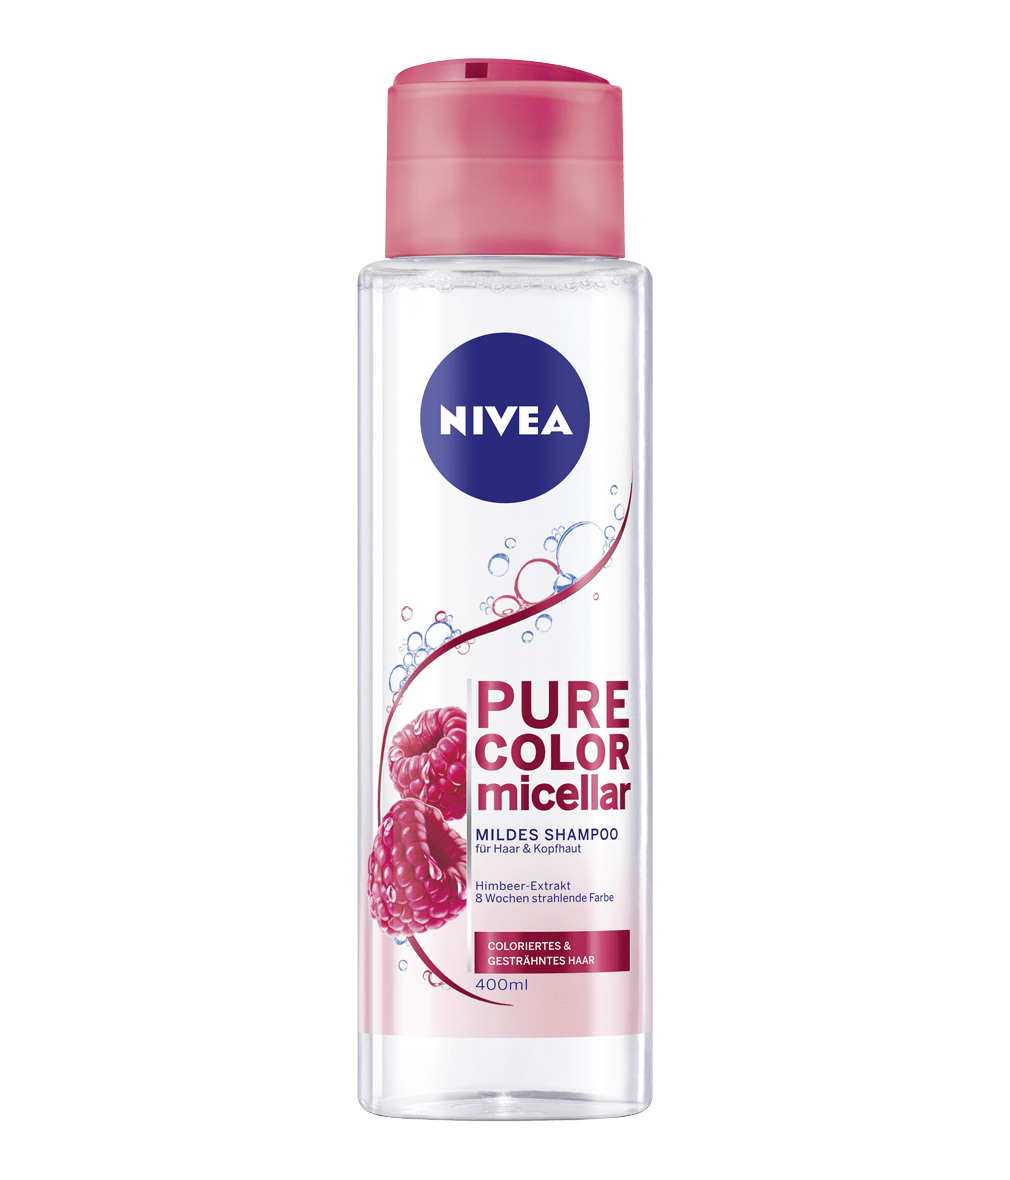 nivea szampon hydro